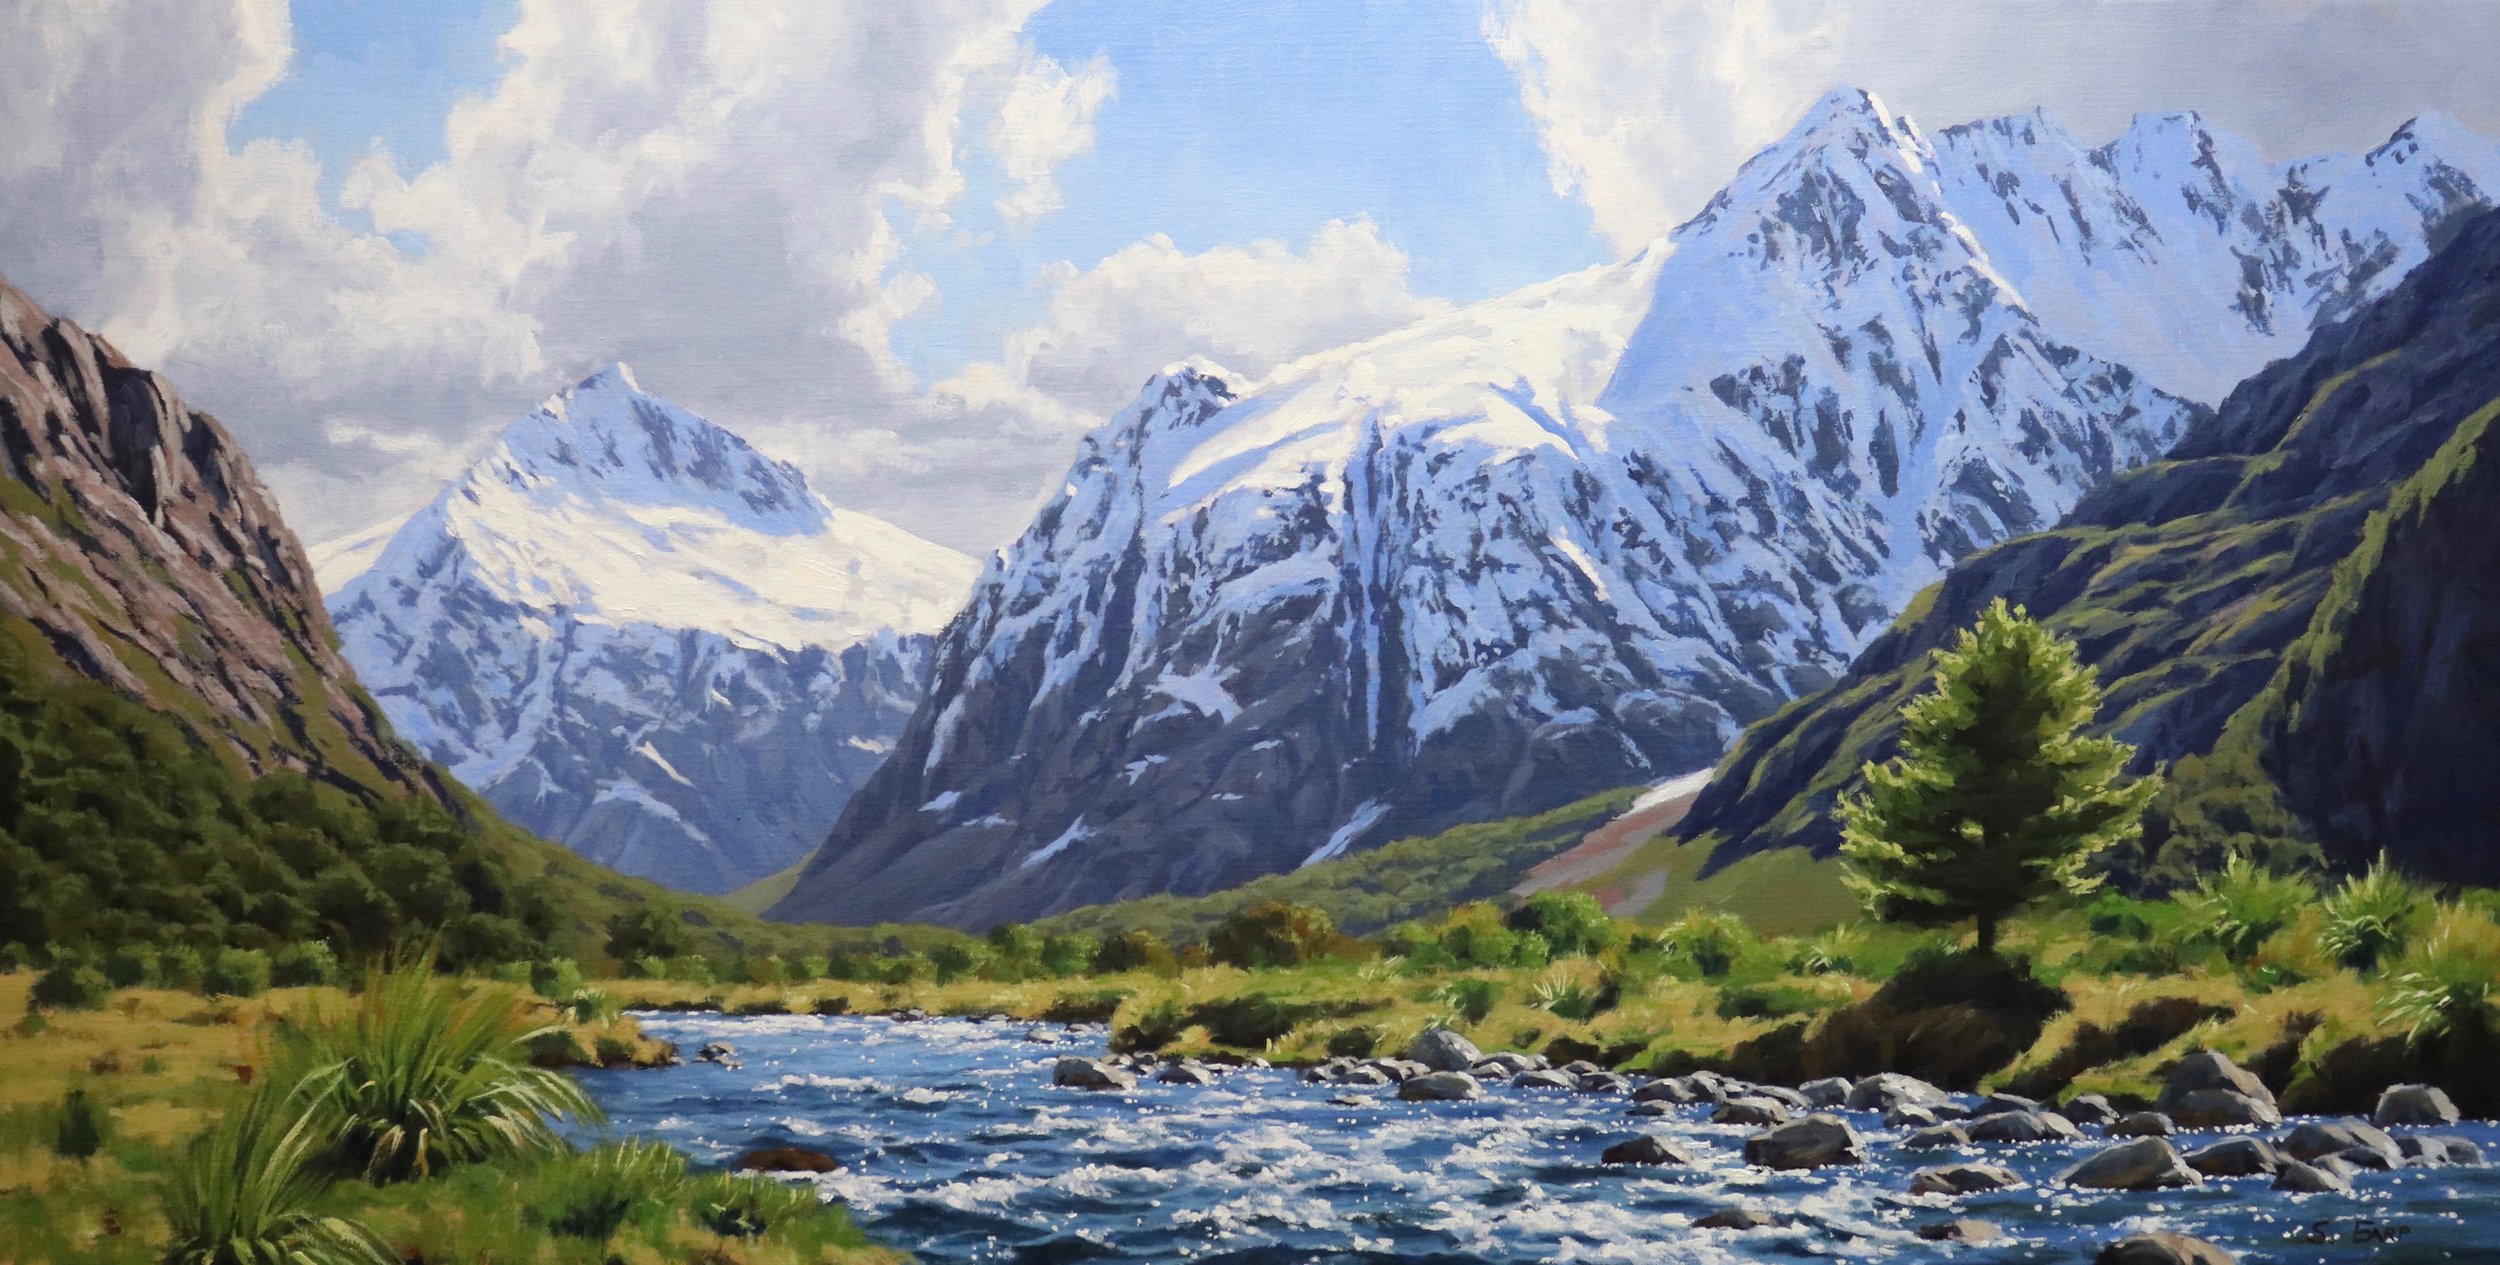 Mt Talbot - New Zealand - Samuel Earp landscape artist - oil painting.jpeg